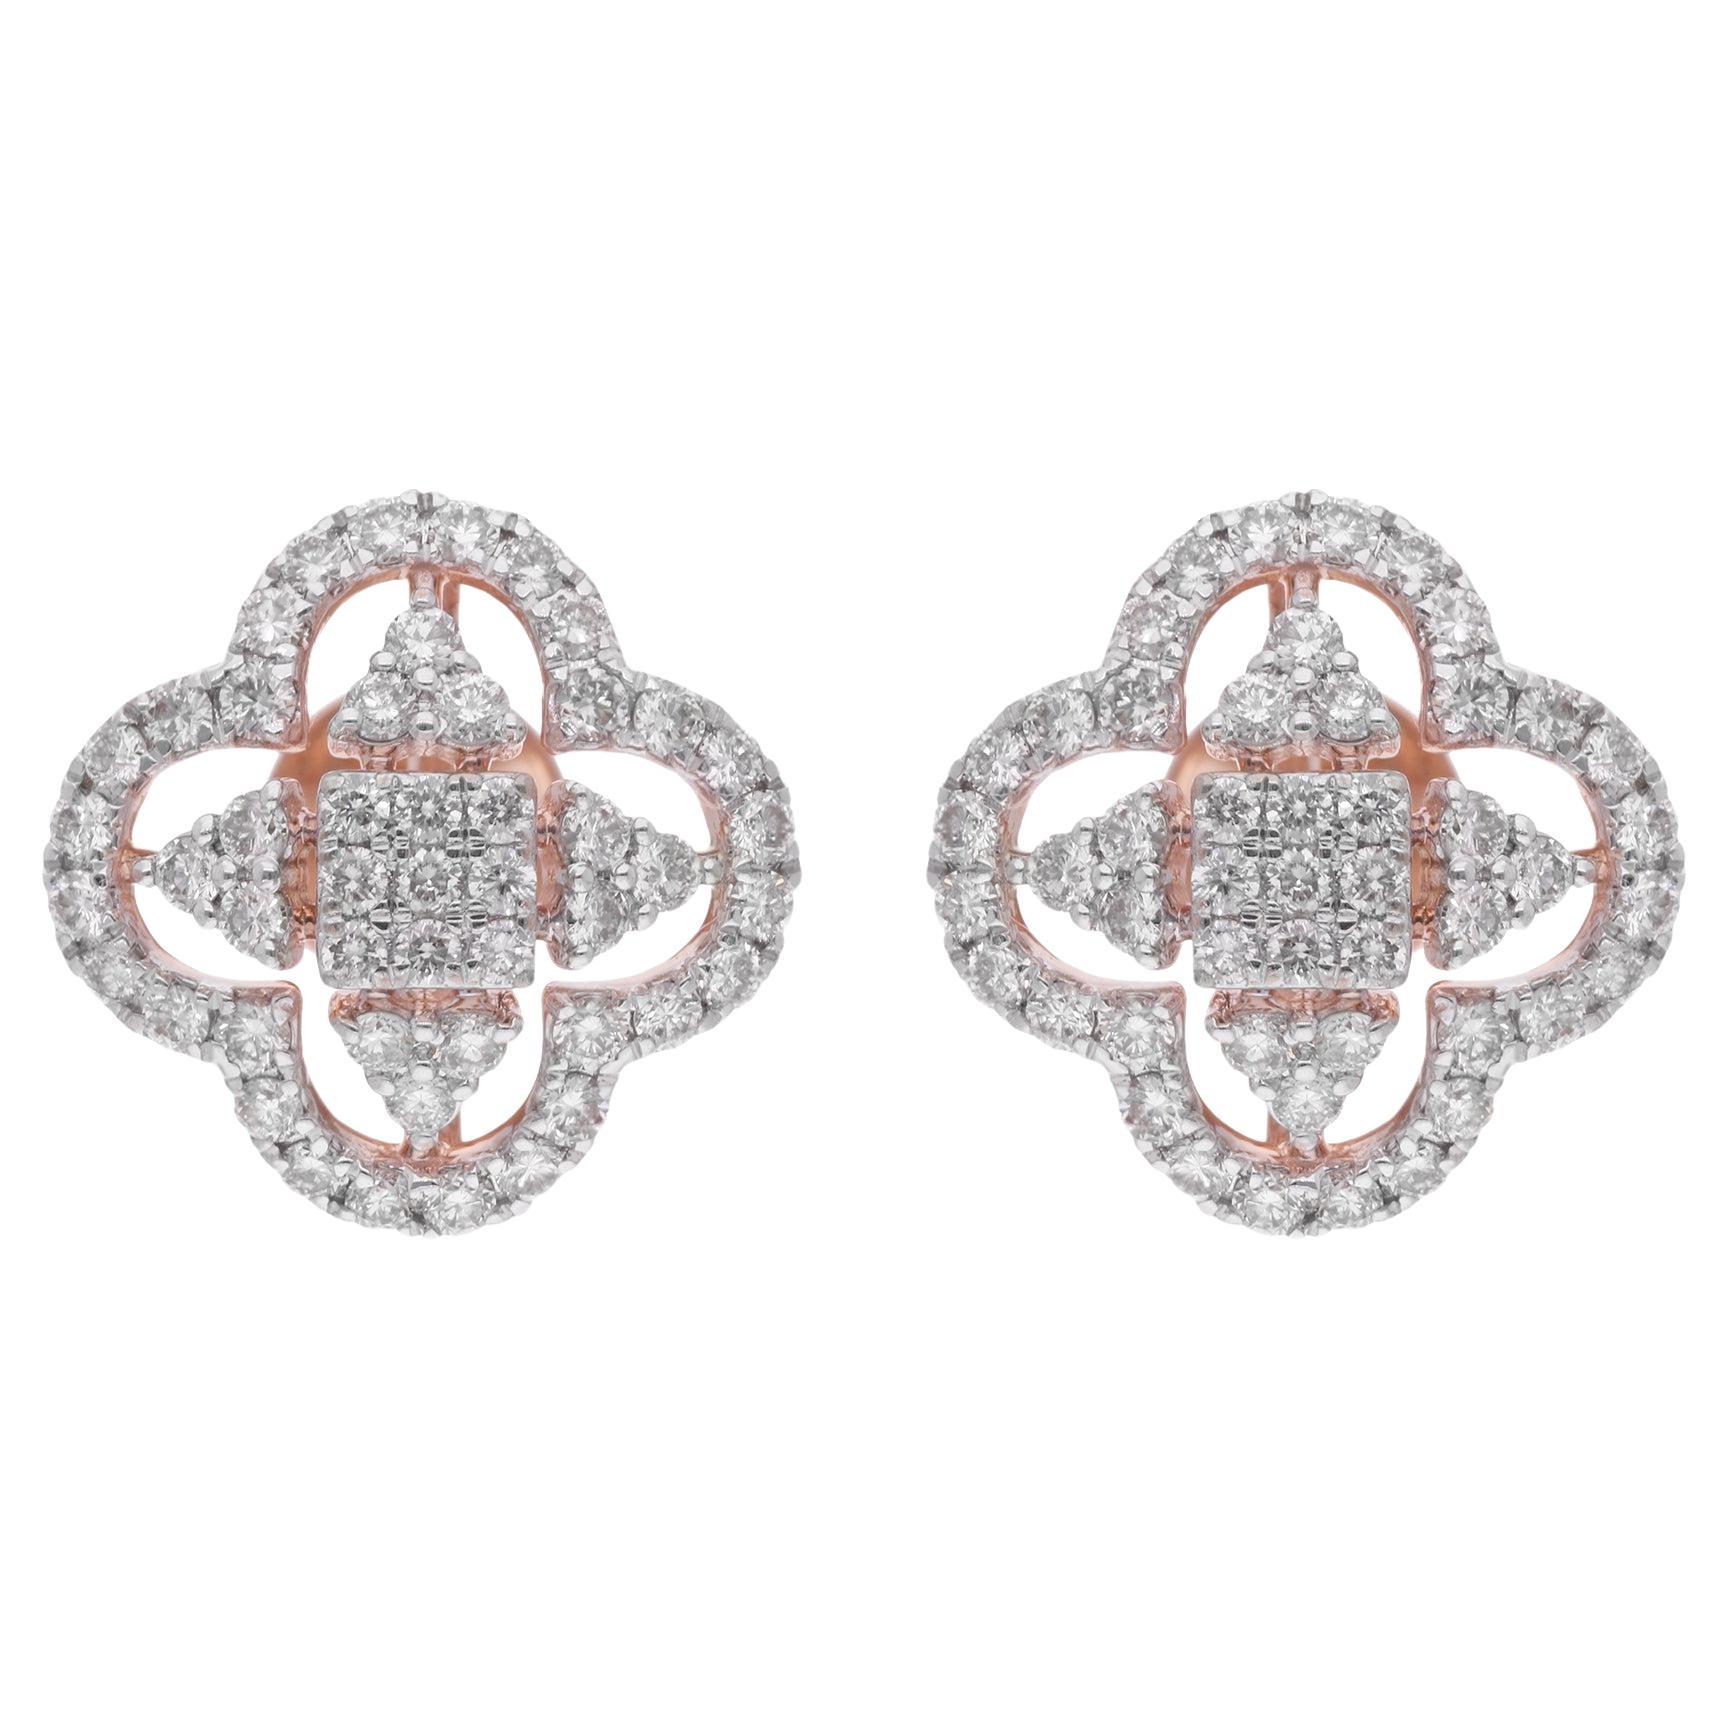 1.10 Carat Natural Diamond Pave Clover Design Stud Earrings 14 Karat Rose Gold